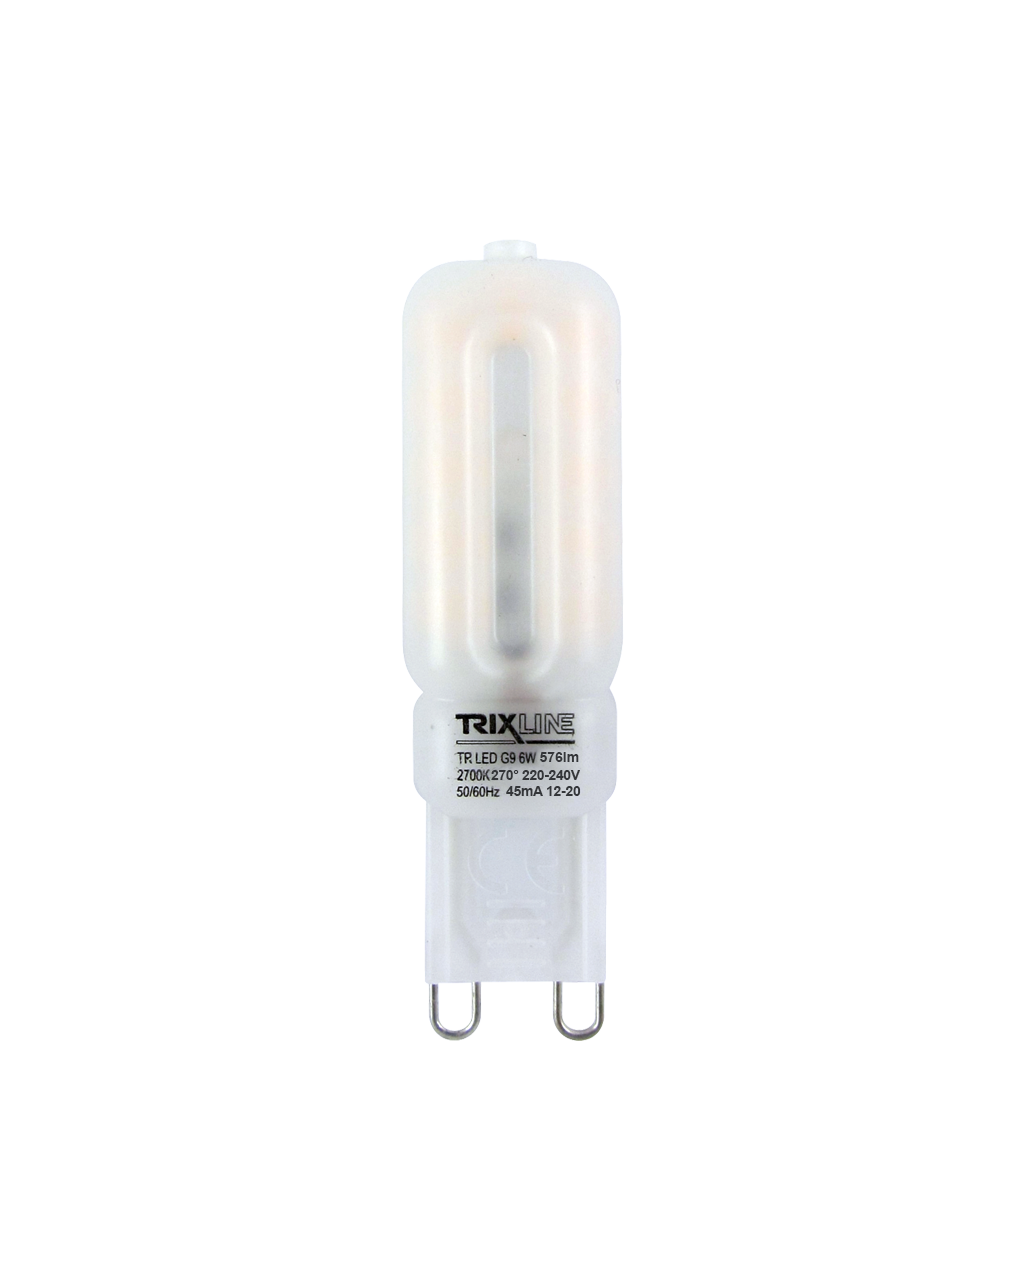 LED bulb BC TR 6W G9 day white